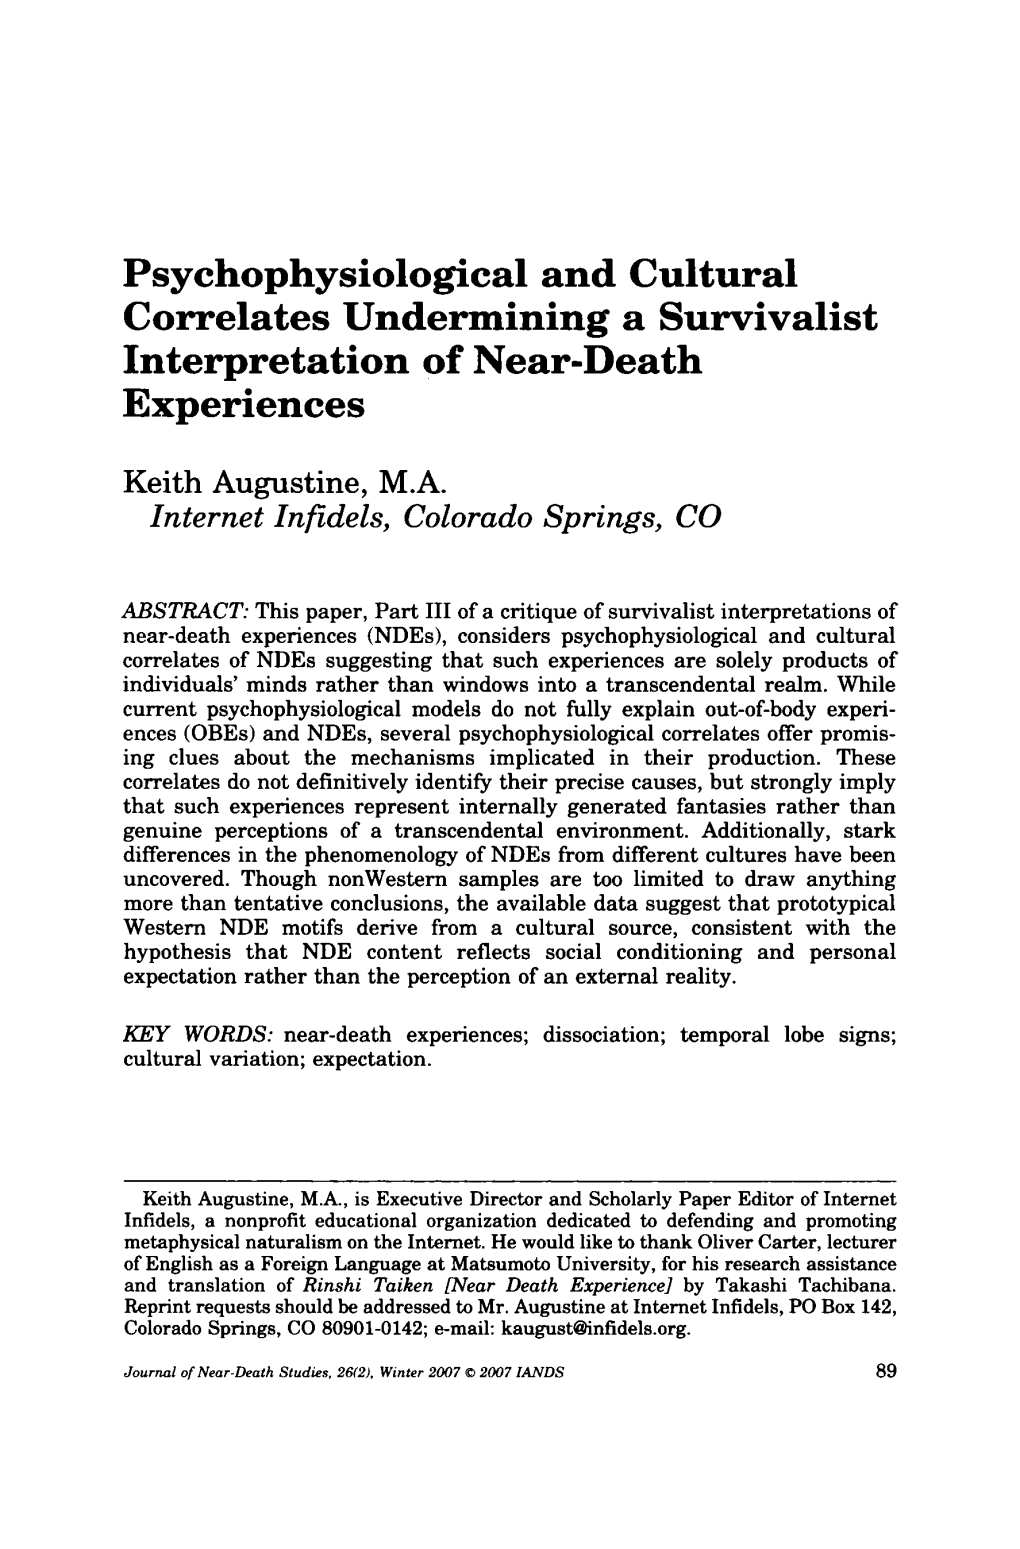 Psychophysiological and Cultural Correlates Undermining a Survivalist Interpretation of Near-Death Experiences